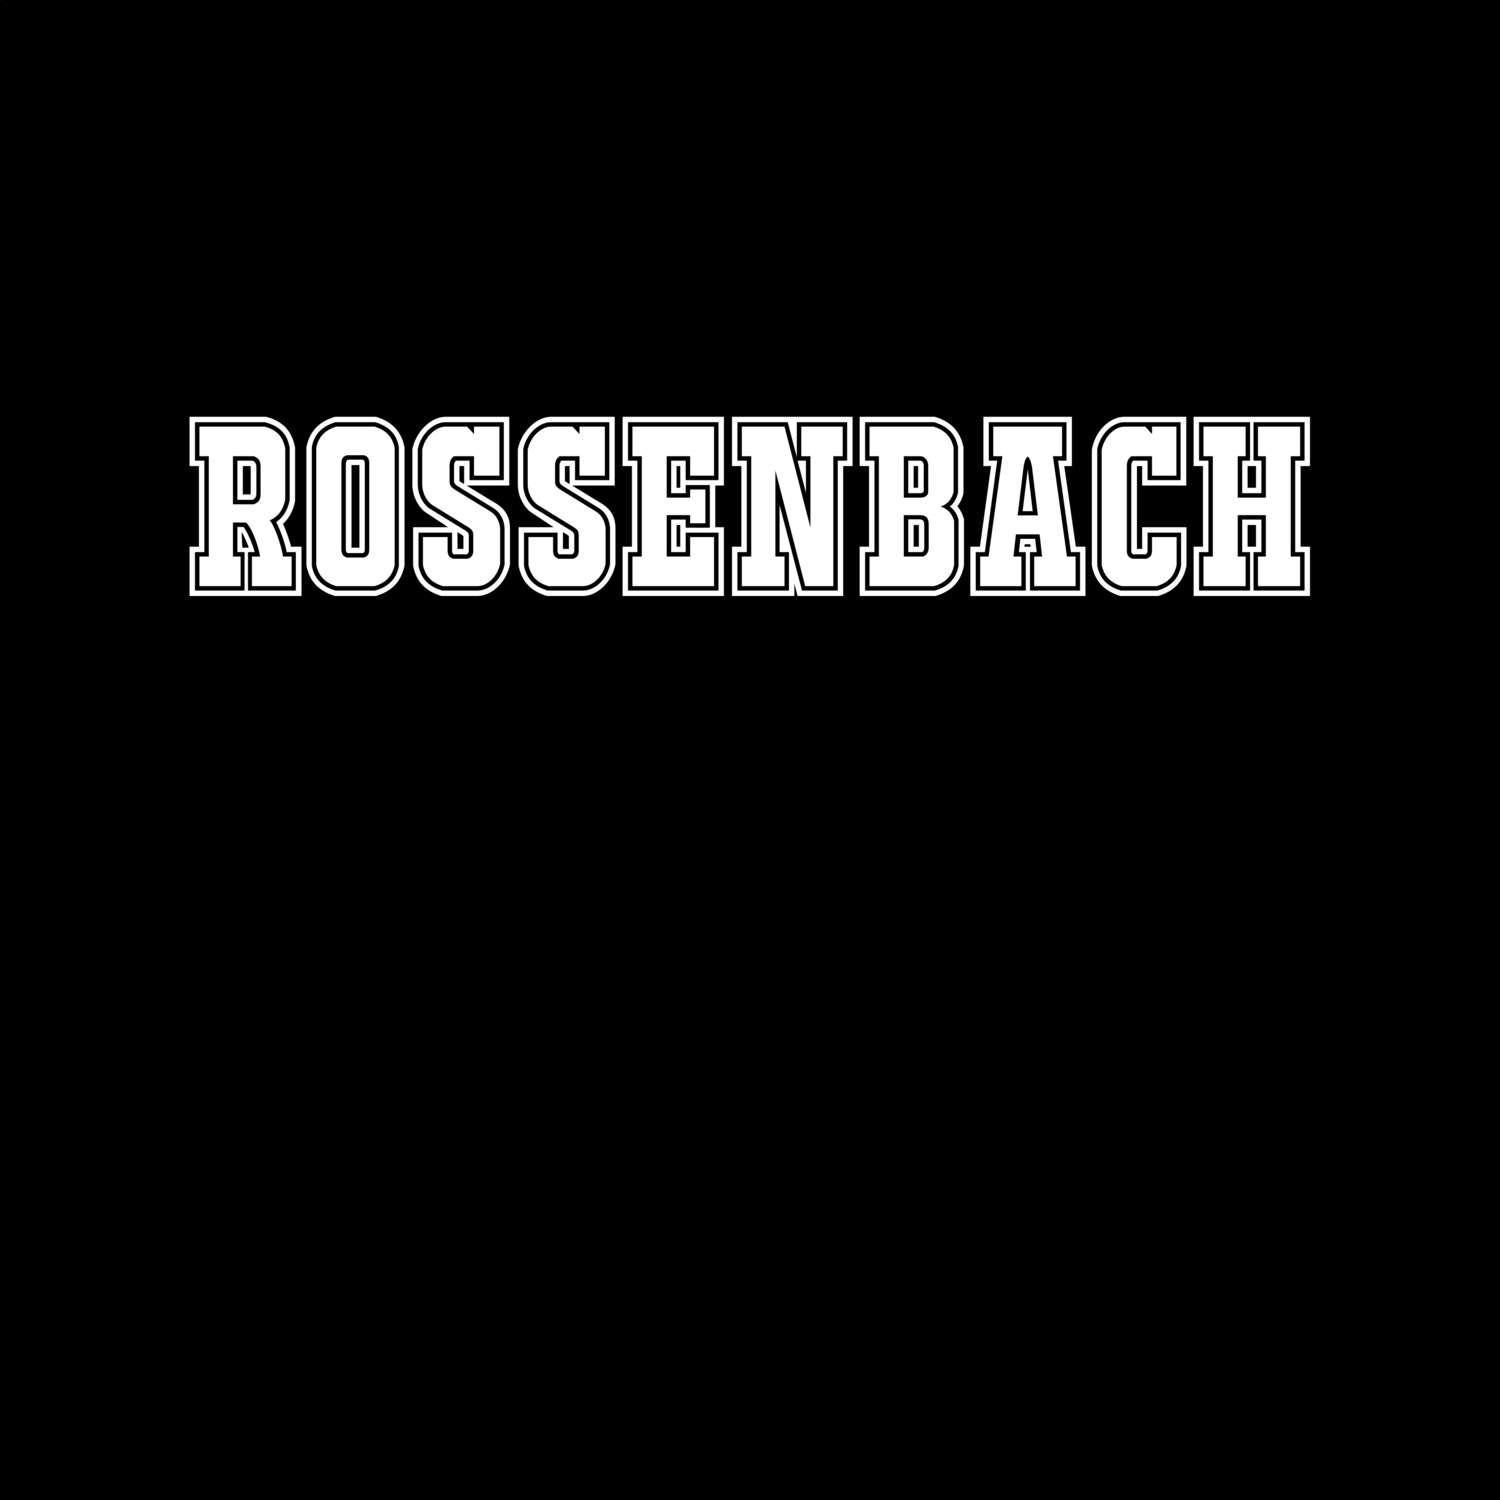 Rossenbach T-Shirt »Classic«